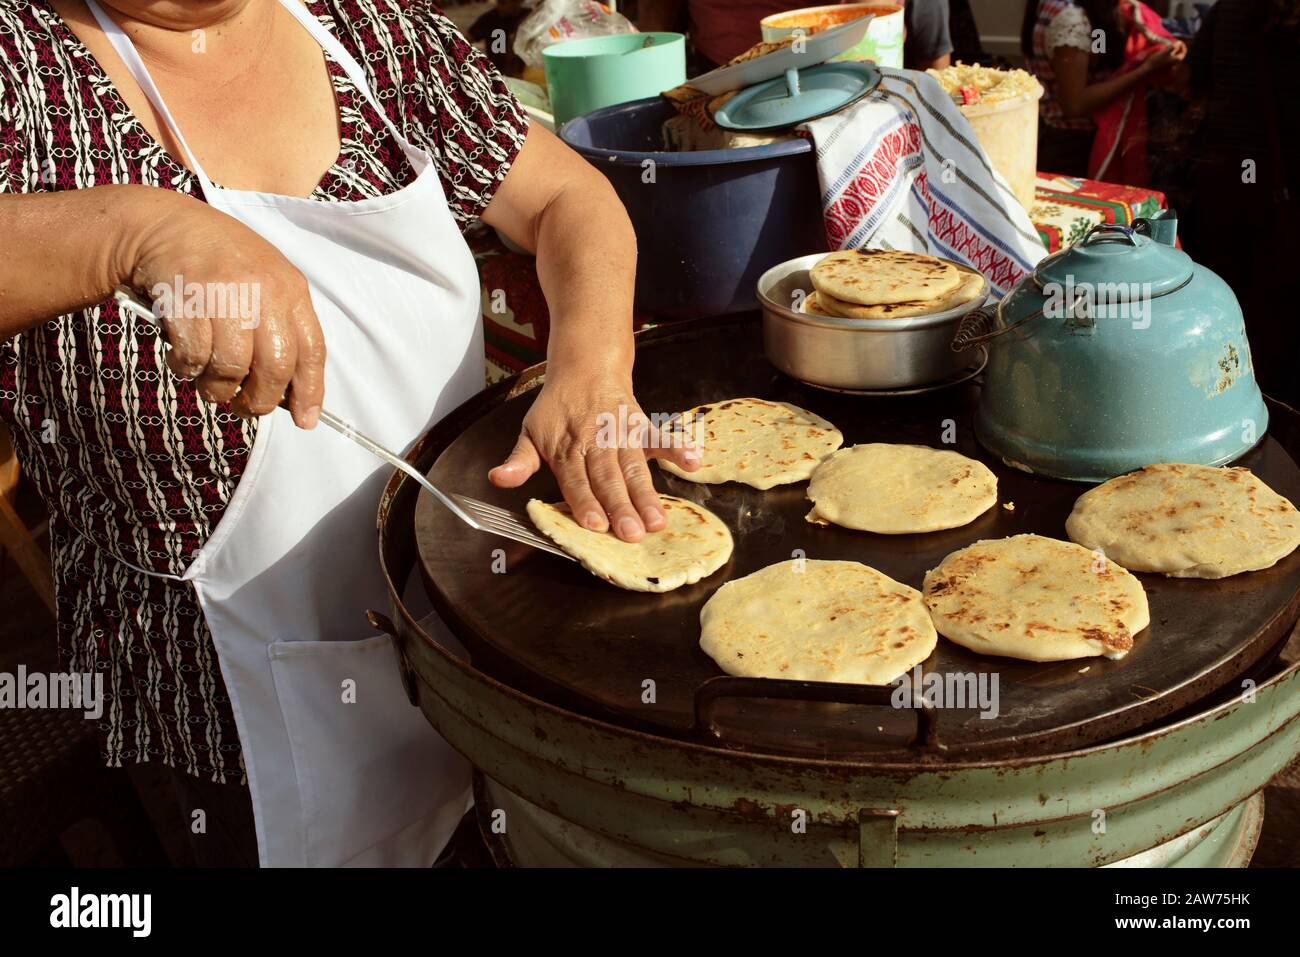 Native woman cooking traditional pupusas (cheese stuffed thick flatbread). Street food in Antigua, Guatemala. Jan 2019 Stock Photo